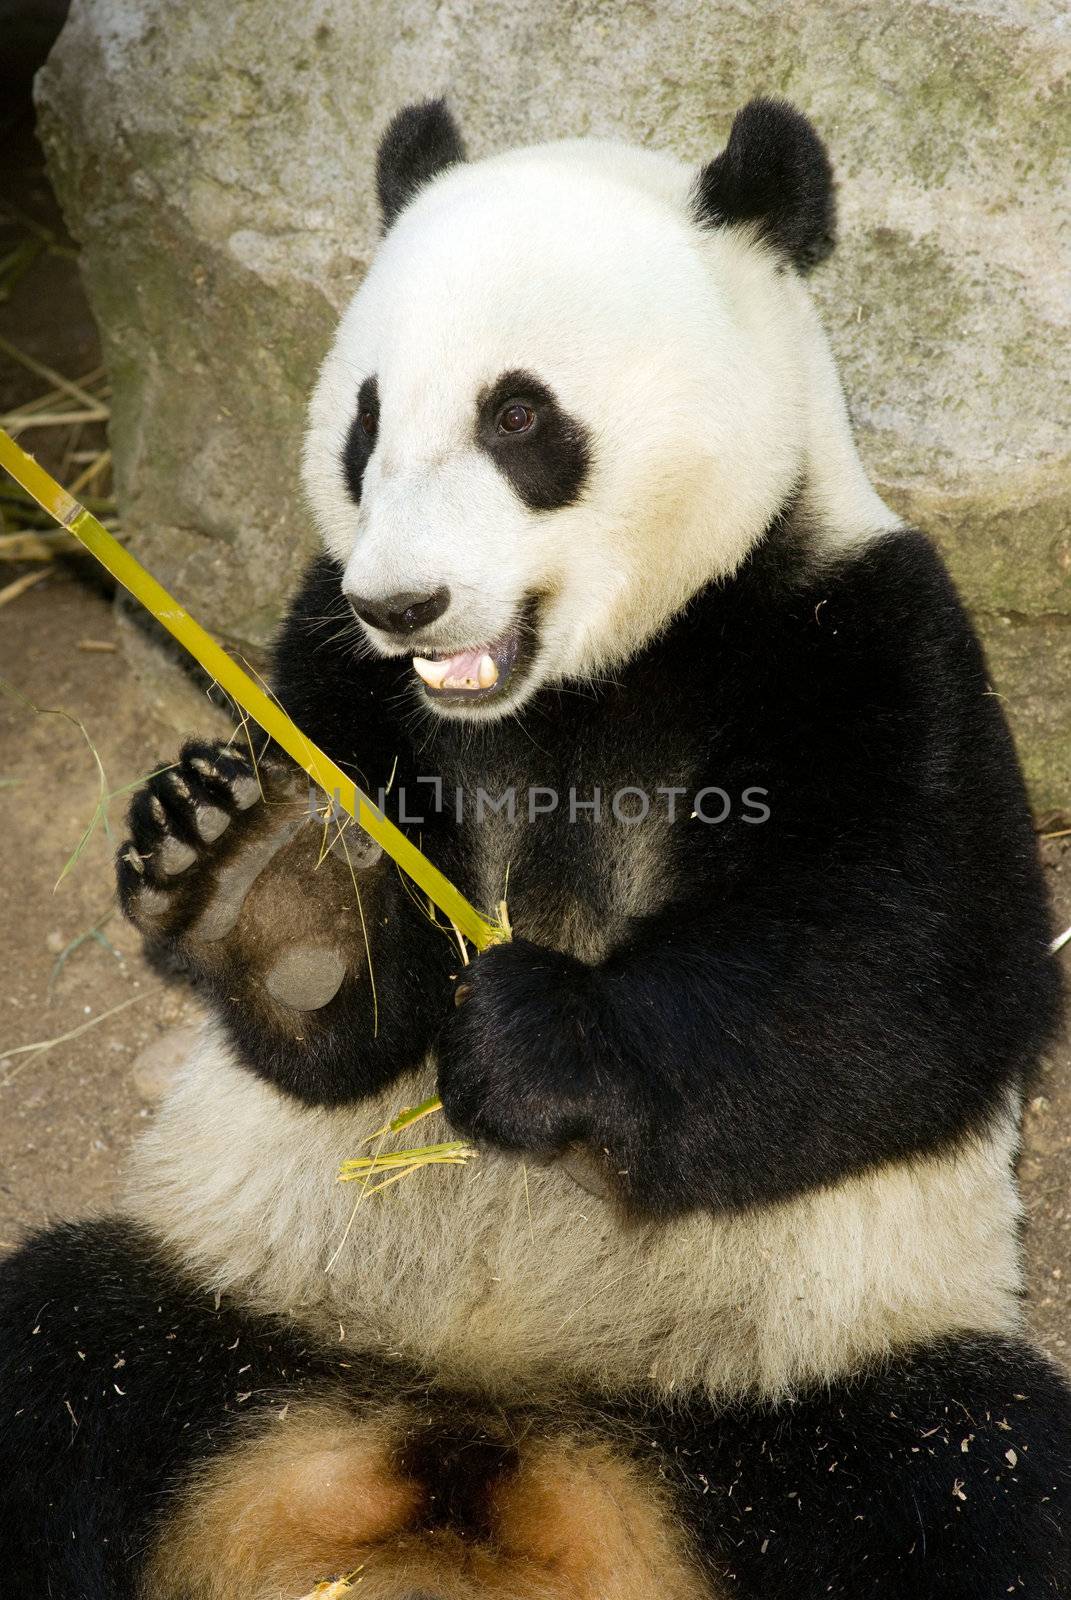 Panda Eats Regular Diet of Bamboo Shoots by ChrisBoswell